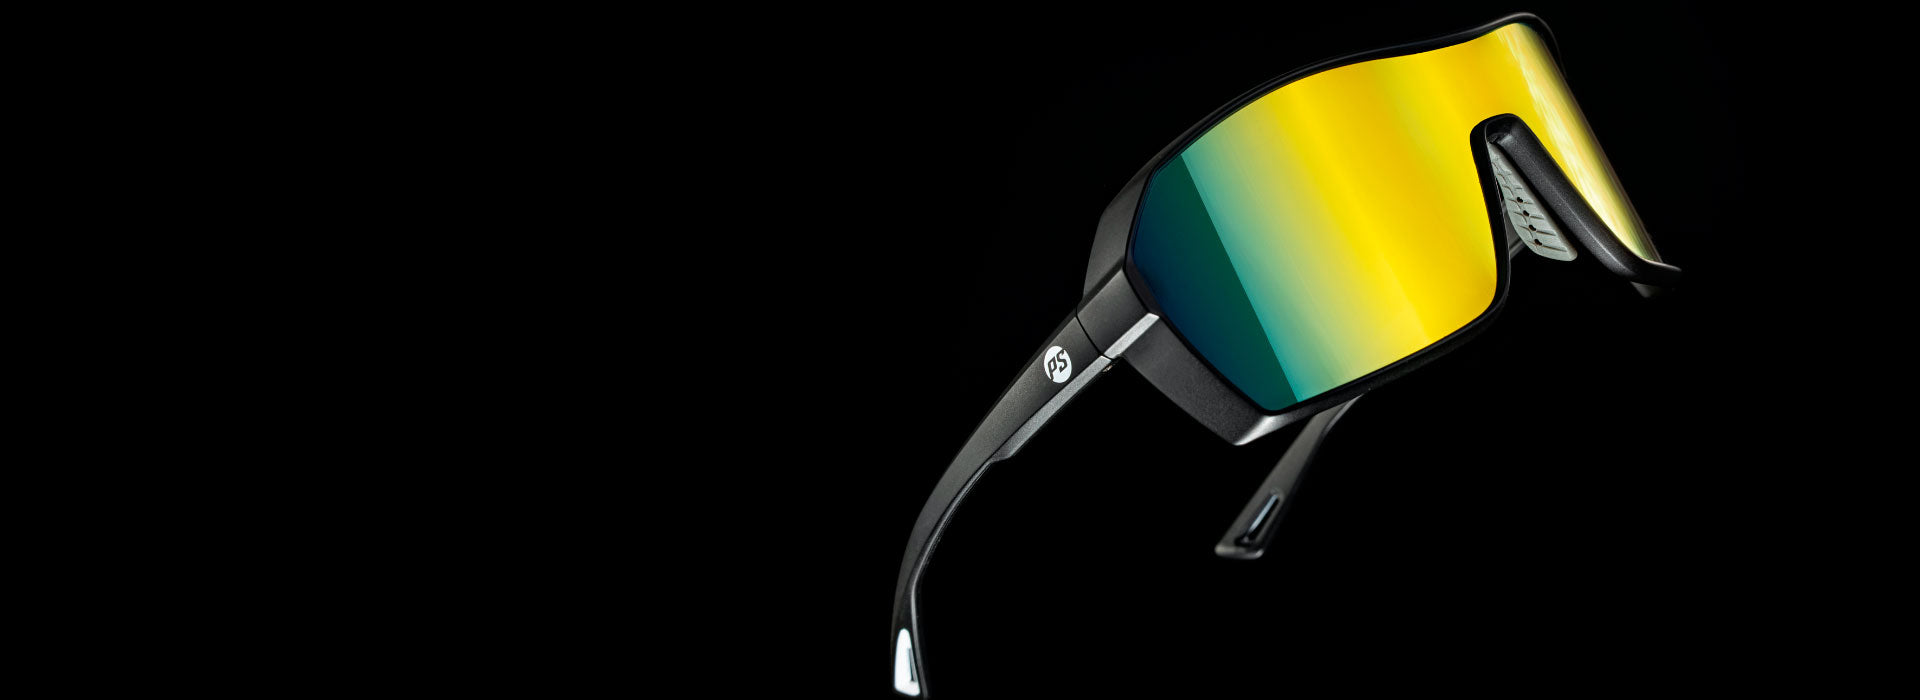 A close-up image of Powerslide sunglasses